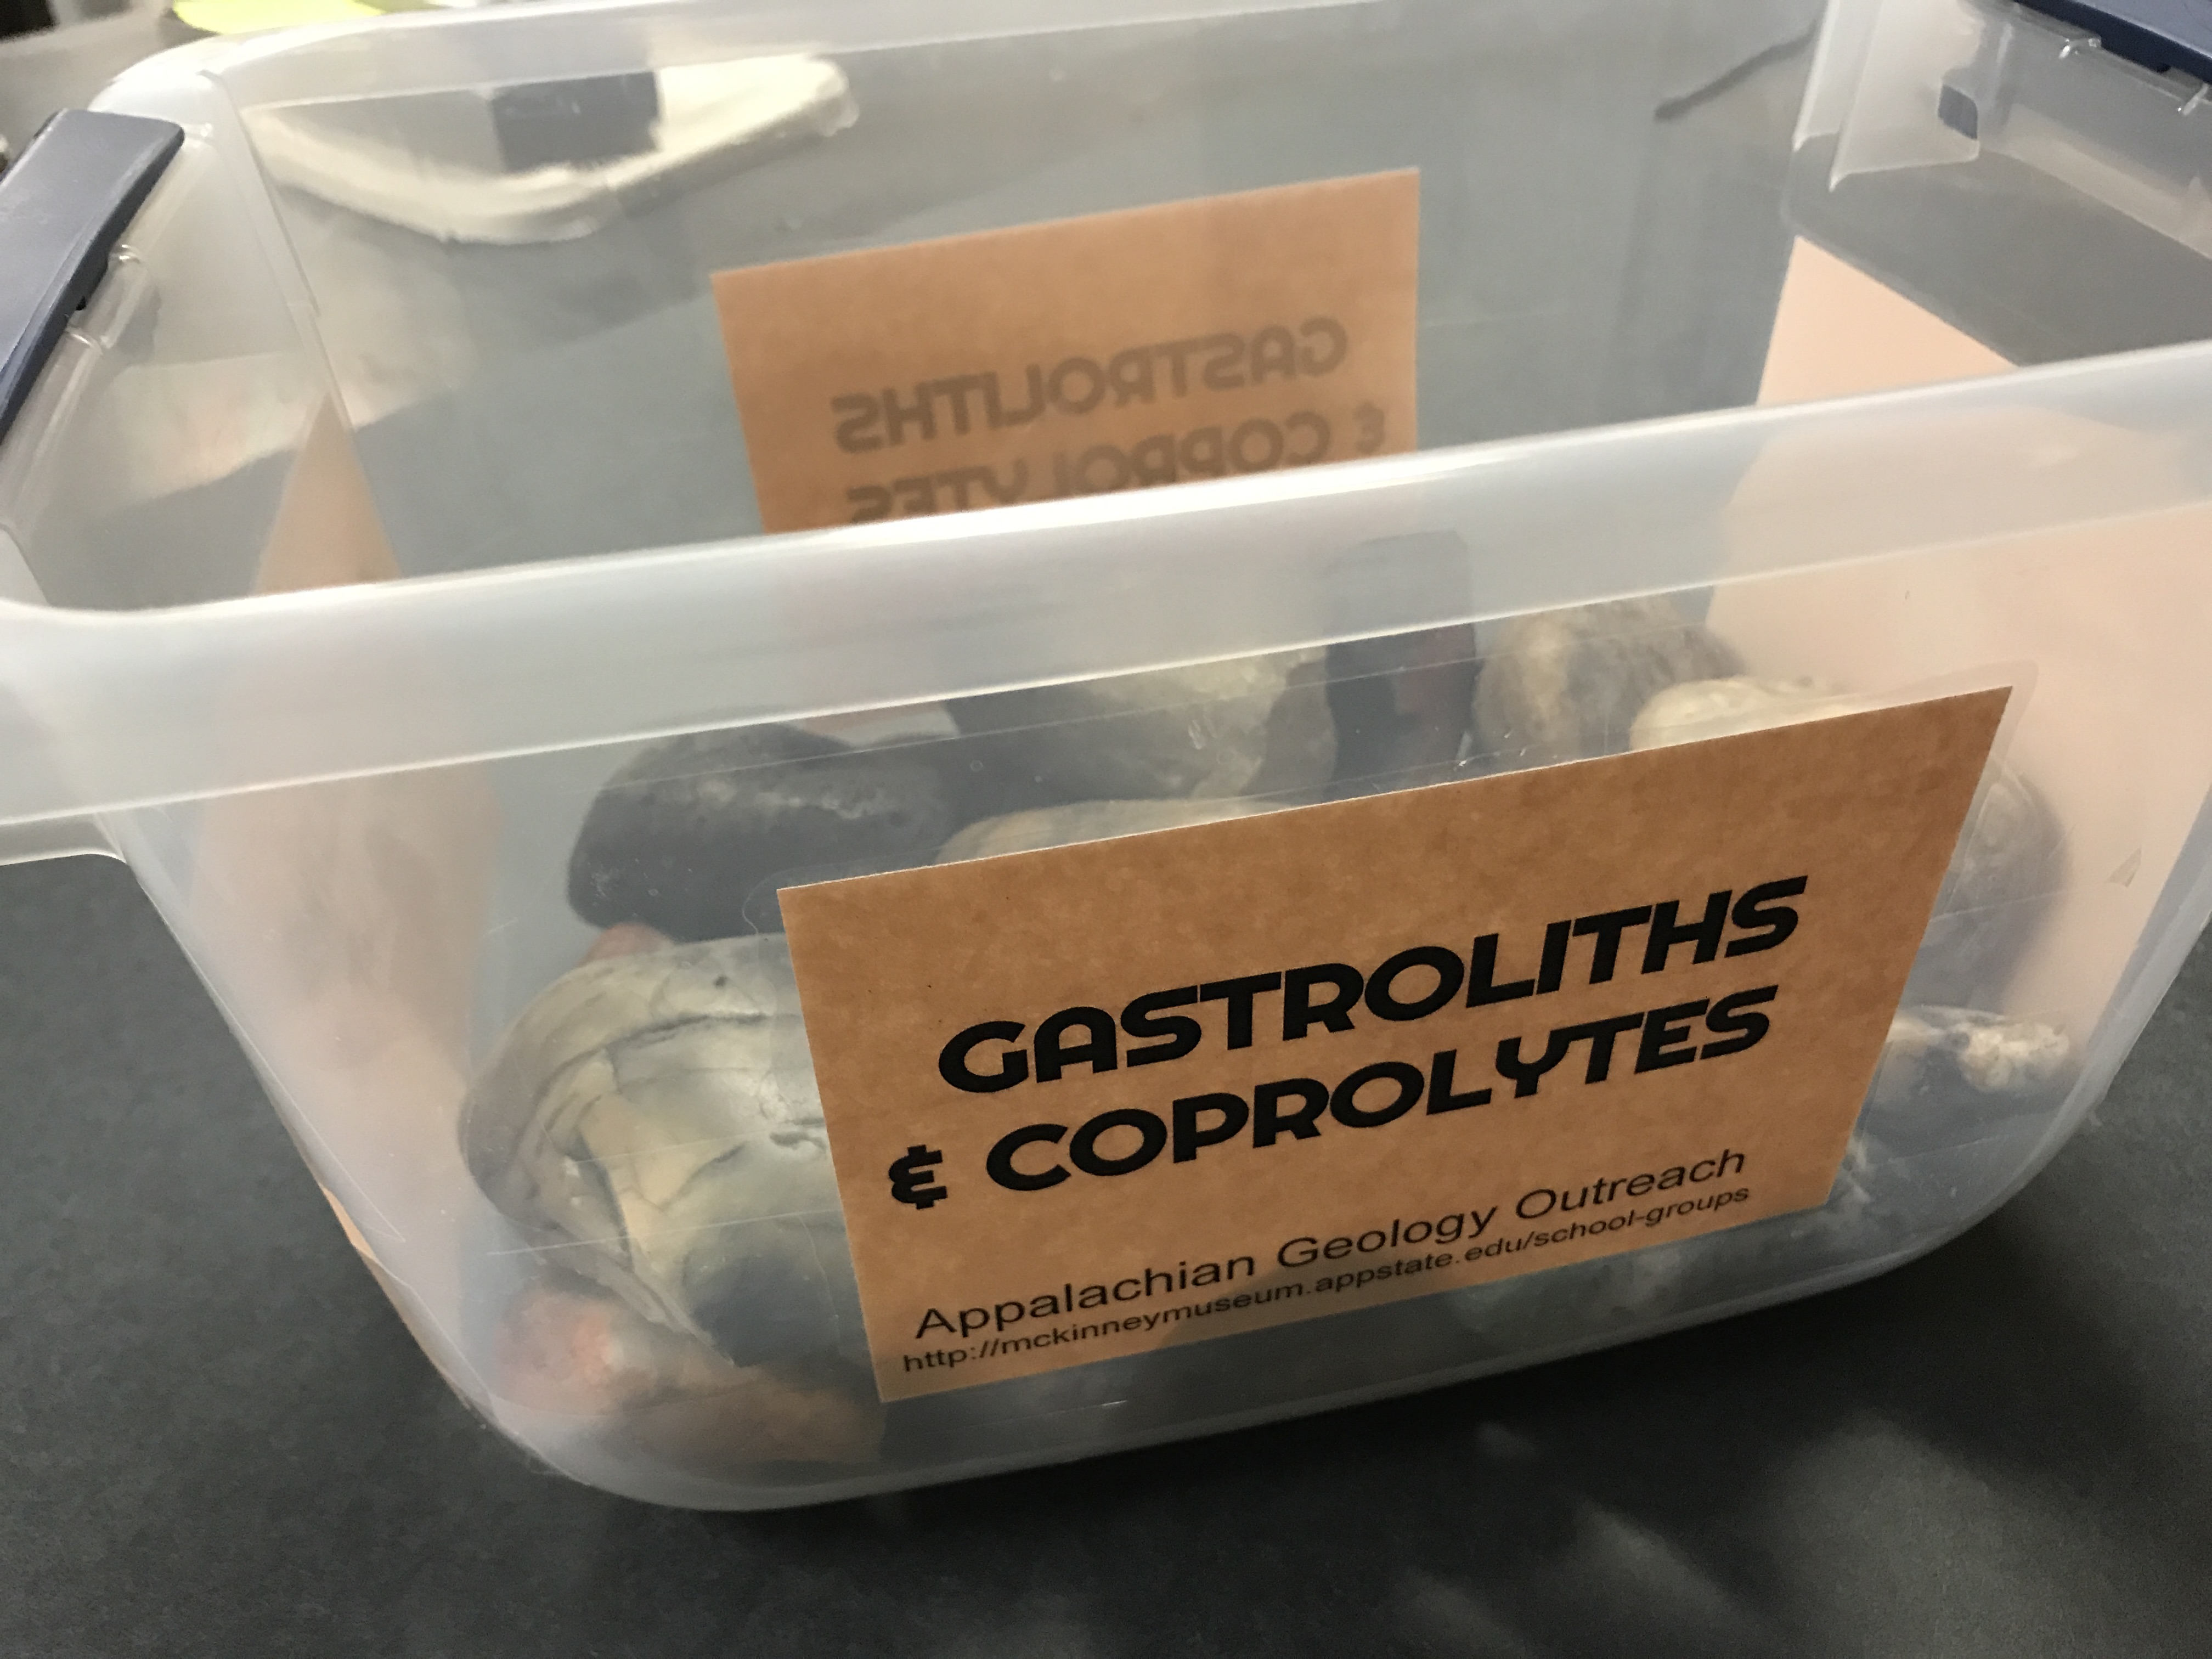 Gastroliths and Coprolites Box